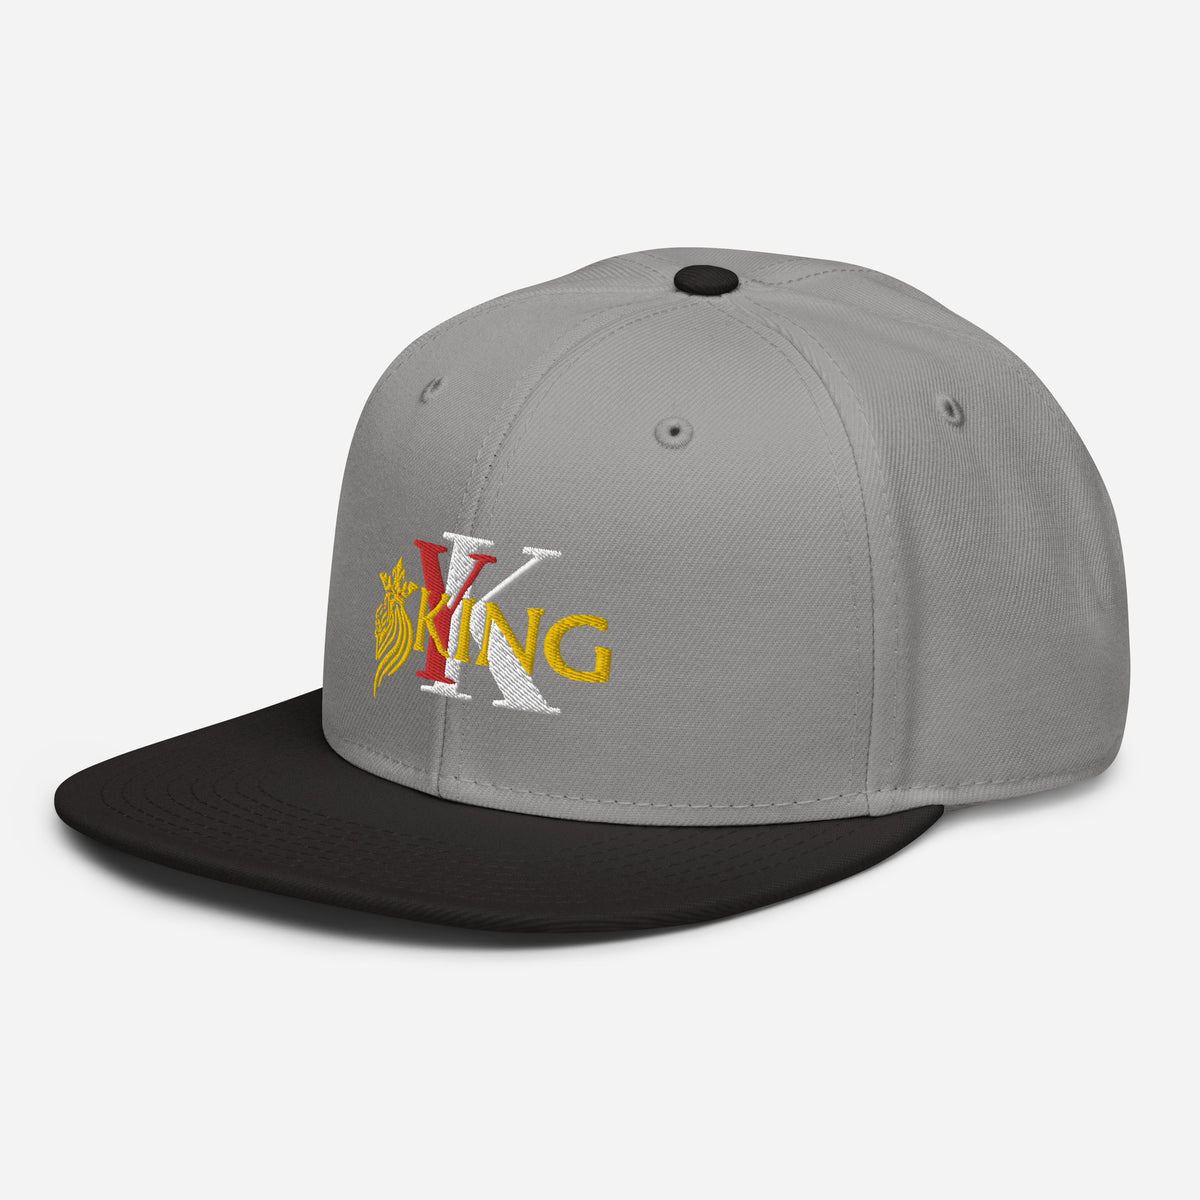 Young Kingsman Snapback Hat's